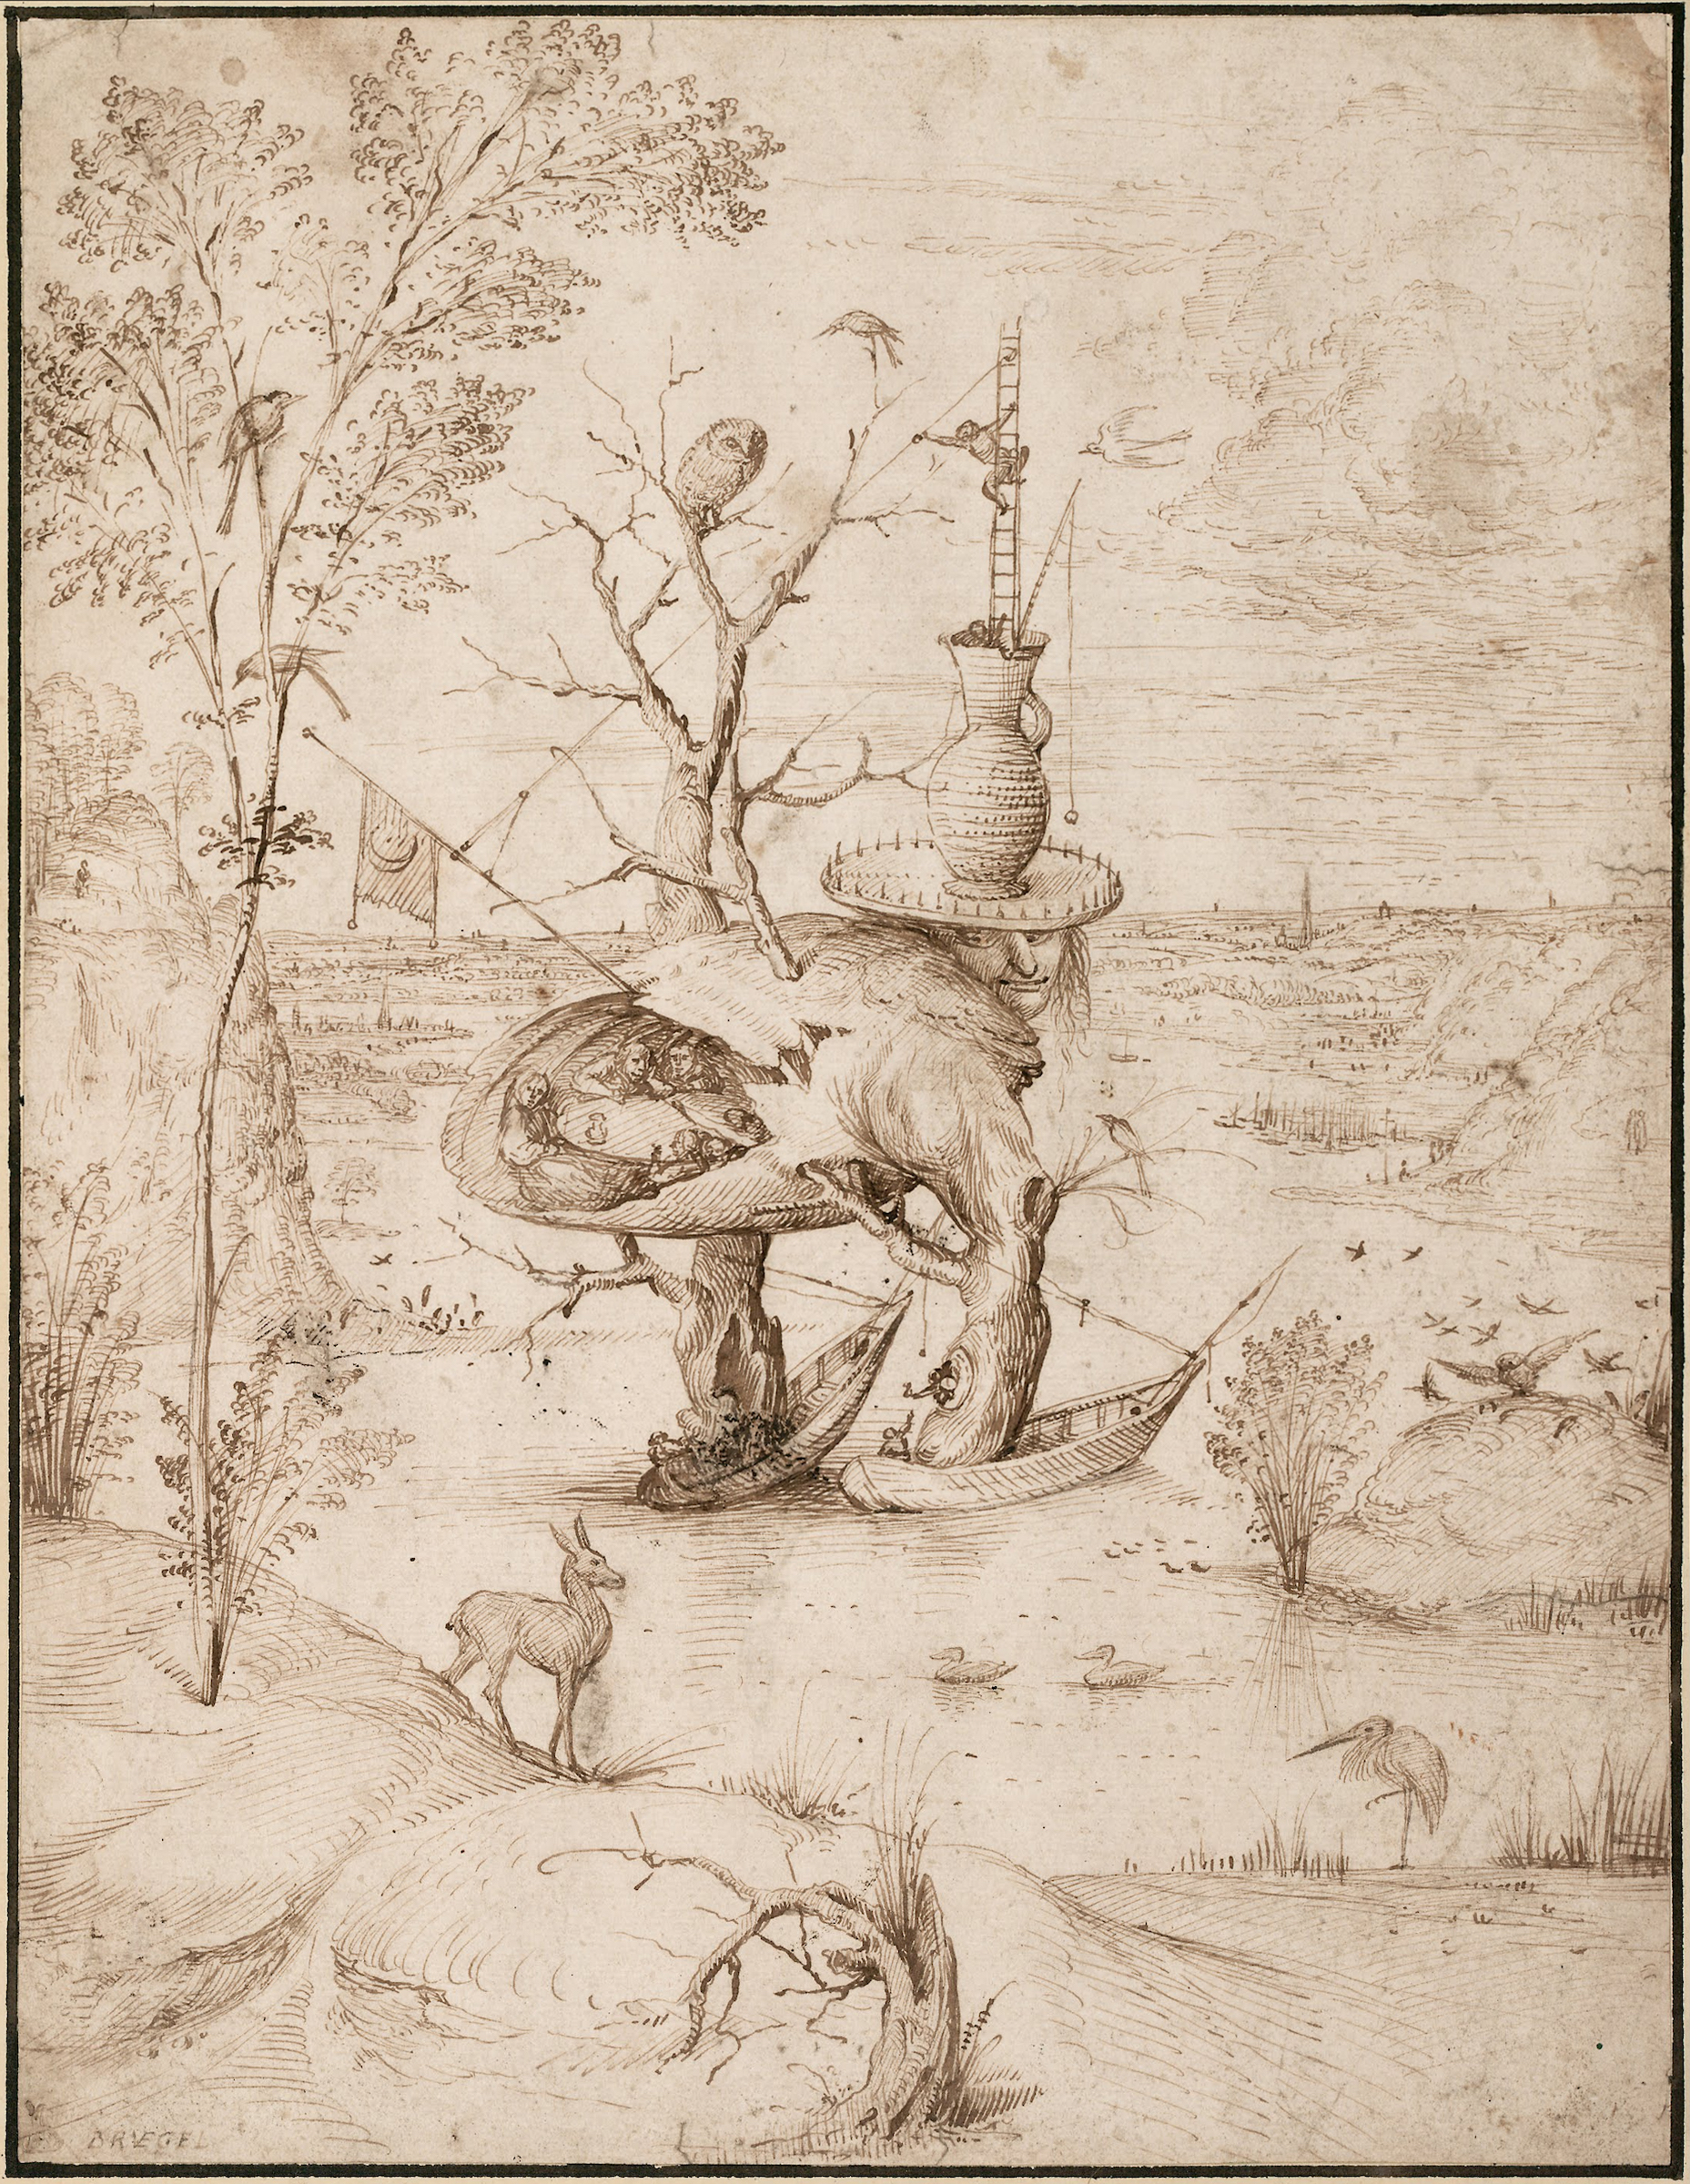 The Tree-Man by Hieronymus Bosch - 1500 - 27.7 x 21.1 cm Europeana